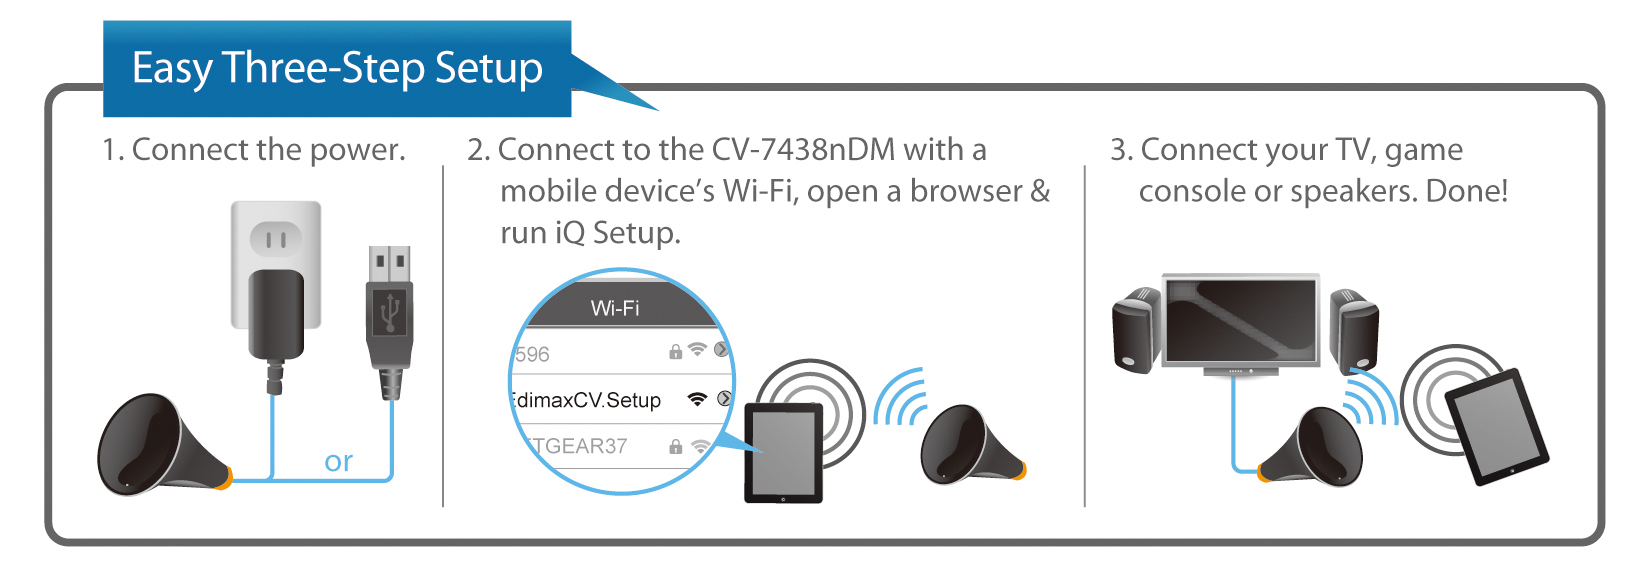 Edimax N600 Universal Dual-Band Wi-Fi Bridge, for Smart TV, Blu-ray, Gaming & Music Streaming CV-7438nDM_3_step_setup.png